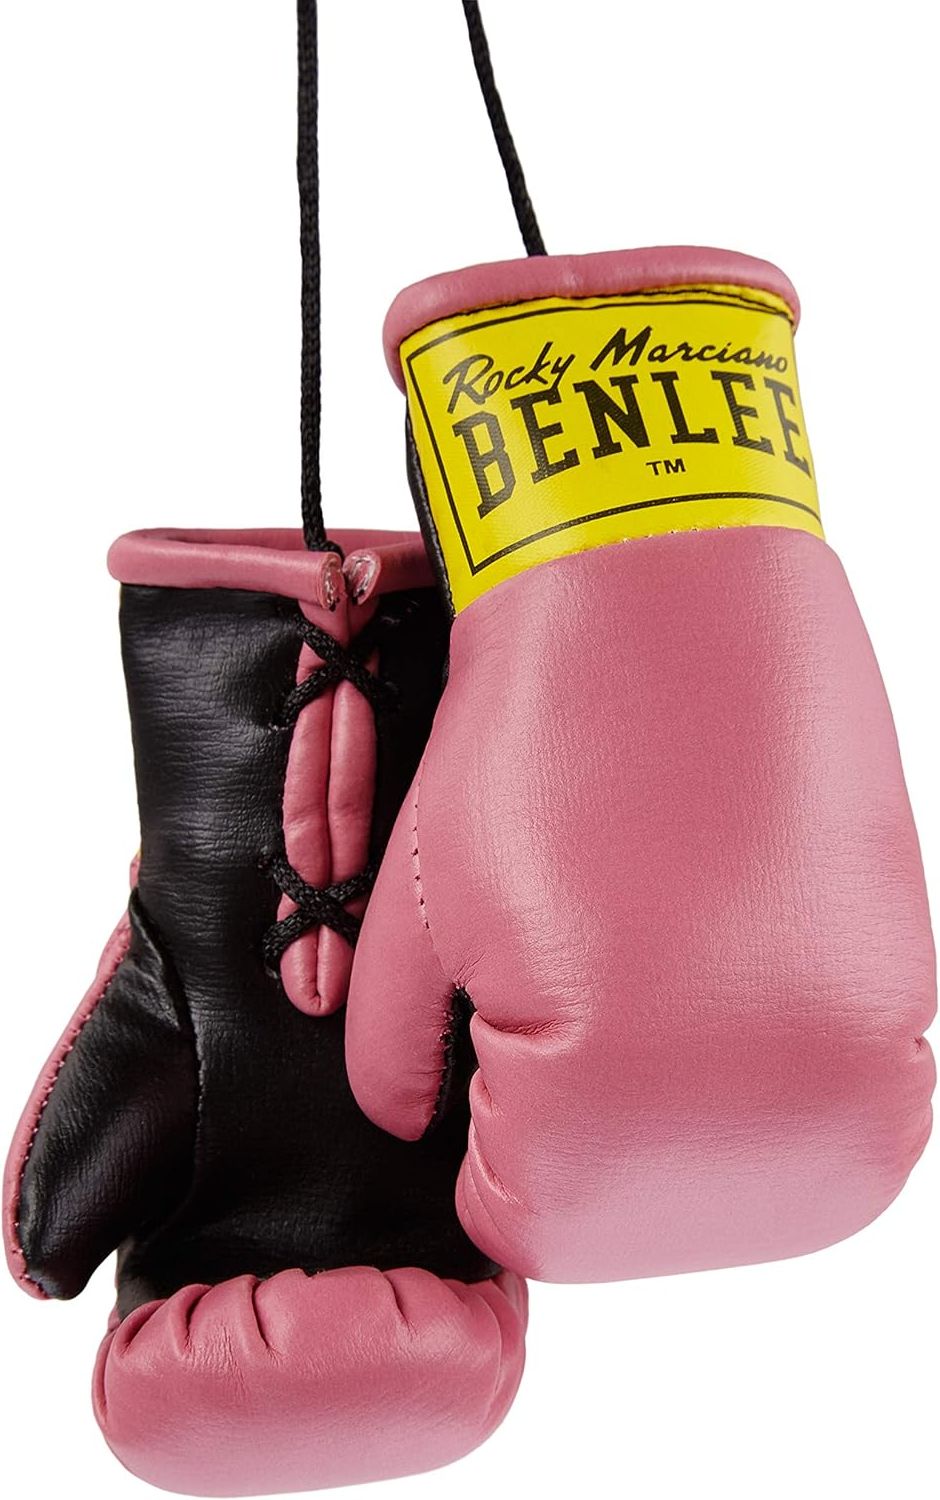  Брелок боксерские перчатки Benlee mini gloves розовые 